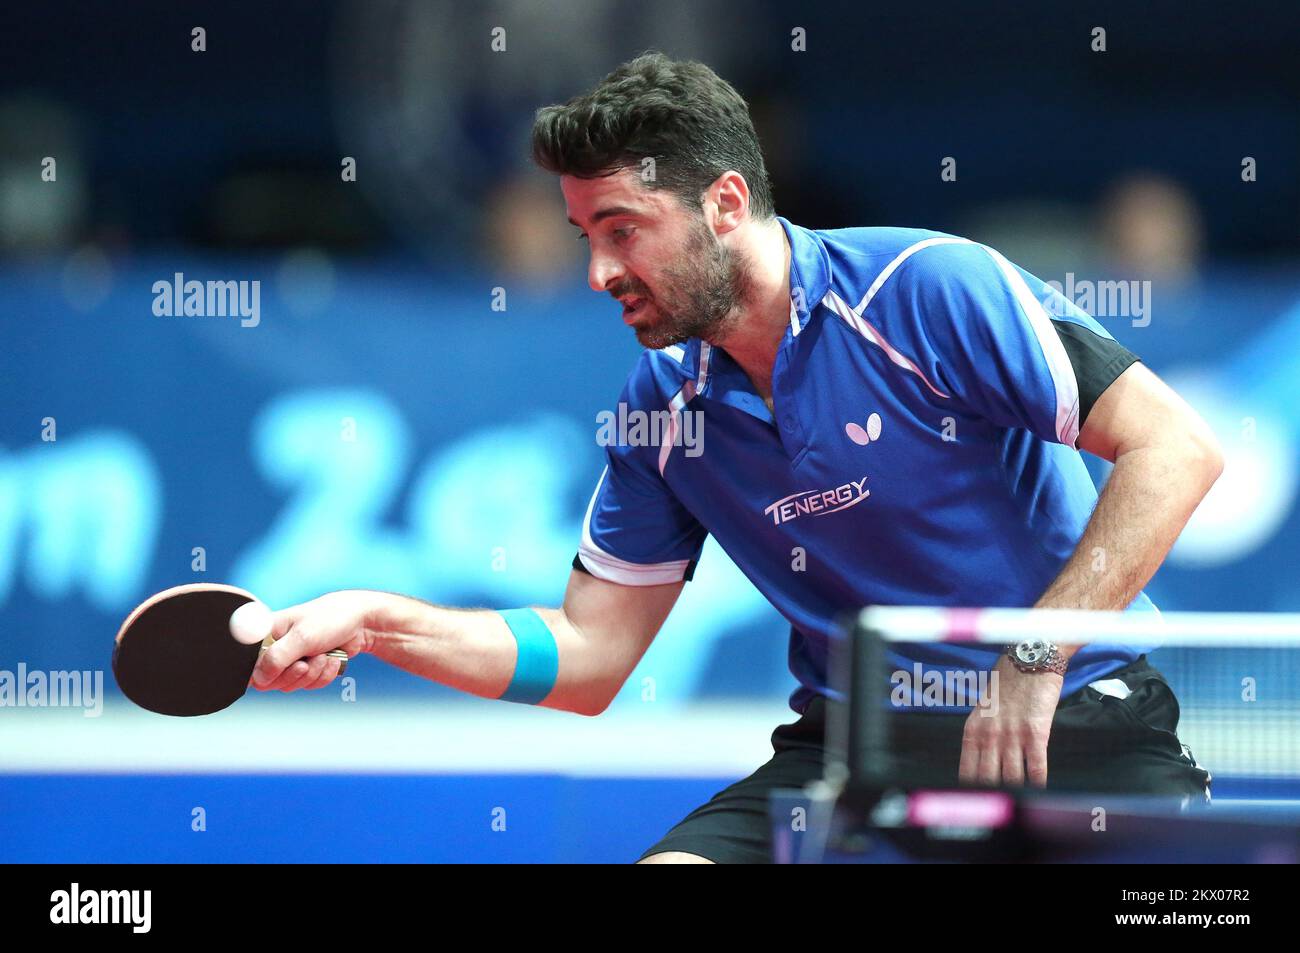 06.05.2017., Zagreb, Croatia - International table tennis tournament Zagreb Open 2017. Man finals, Tristan Flore - Panagiotis Gionis. Photo: Sanjin Strukic/PIXSELL  Stock Photo